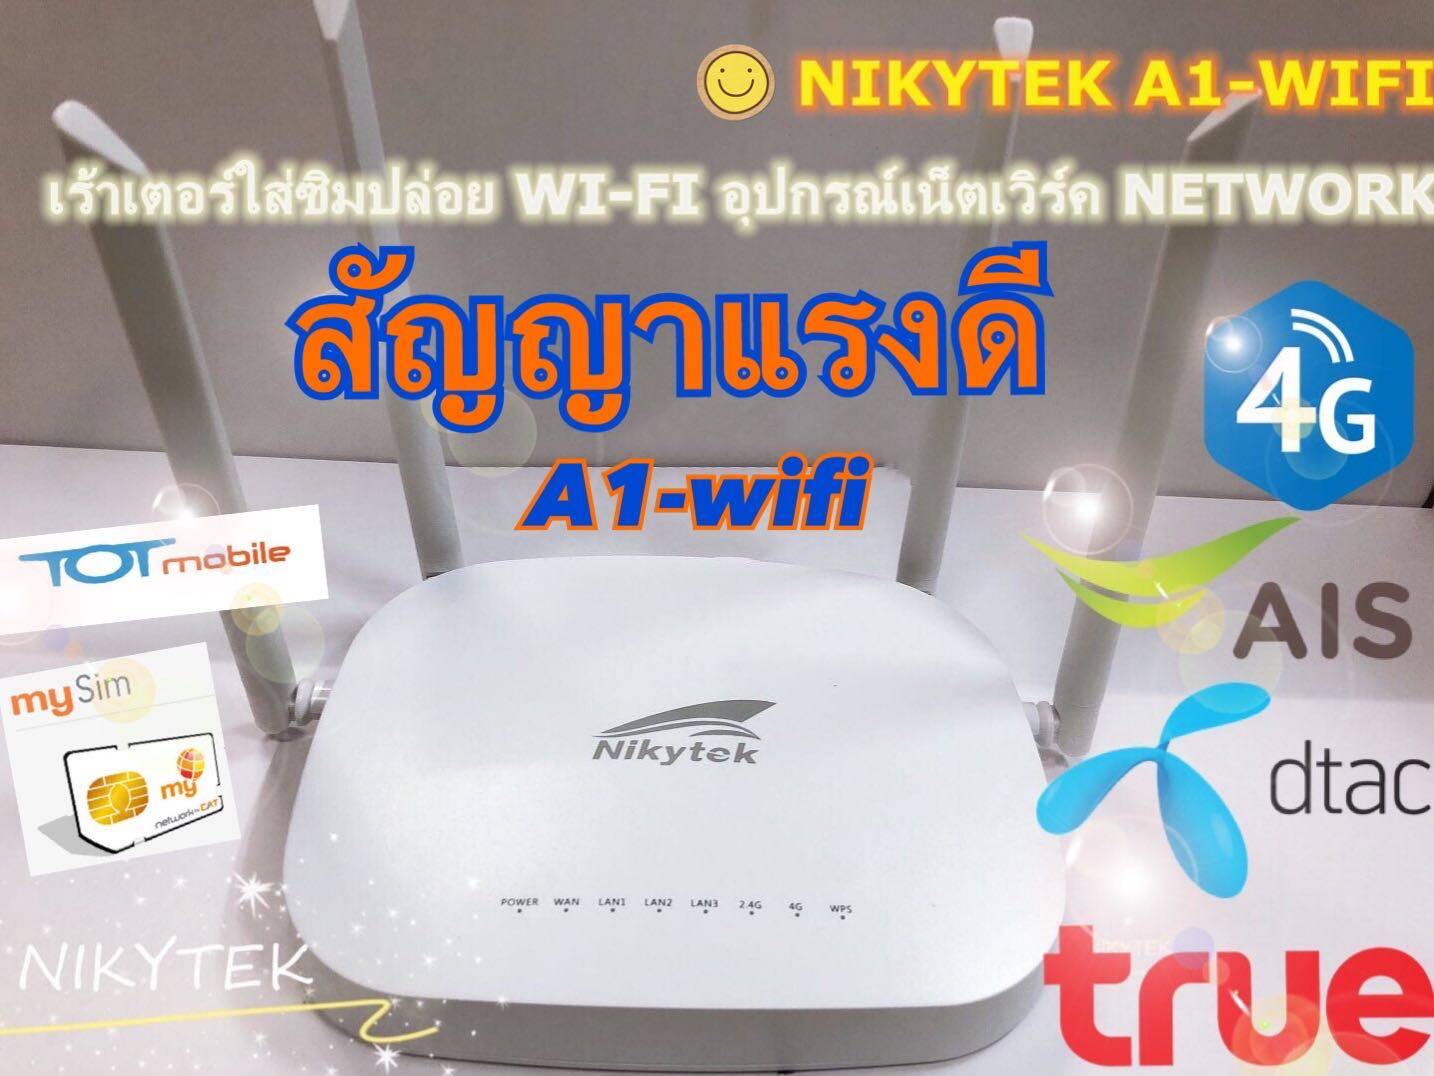 NIKYTEKเราเตอร์ใส่SIMรุ่น A1-WiFIสัญญาณเน็ตแรงมากรองรับได้ทุกSIM 3G/4GWi-Fiเราเตอร์ 300Mbps wirelessใช้กับกล้องวงจรปิด,ต่อมือถือหรือคอม,สินค้าที่รองรับwifi